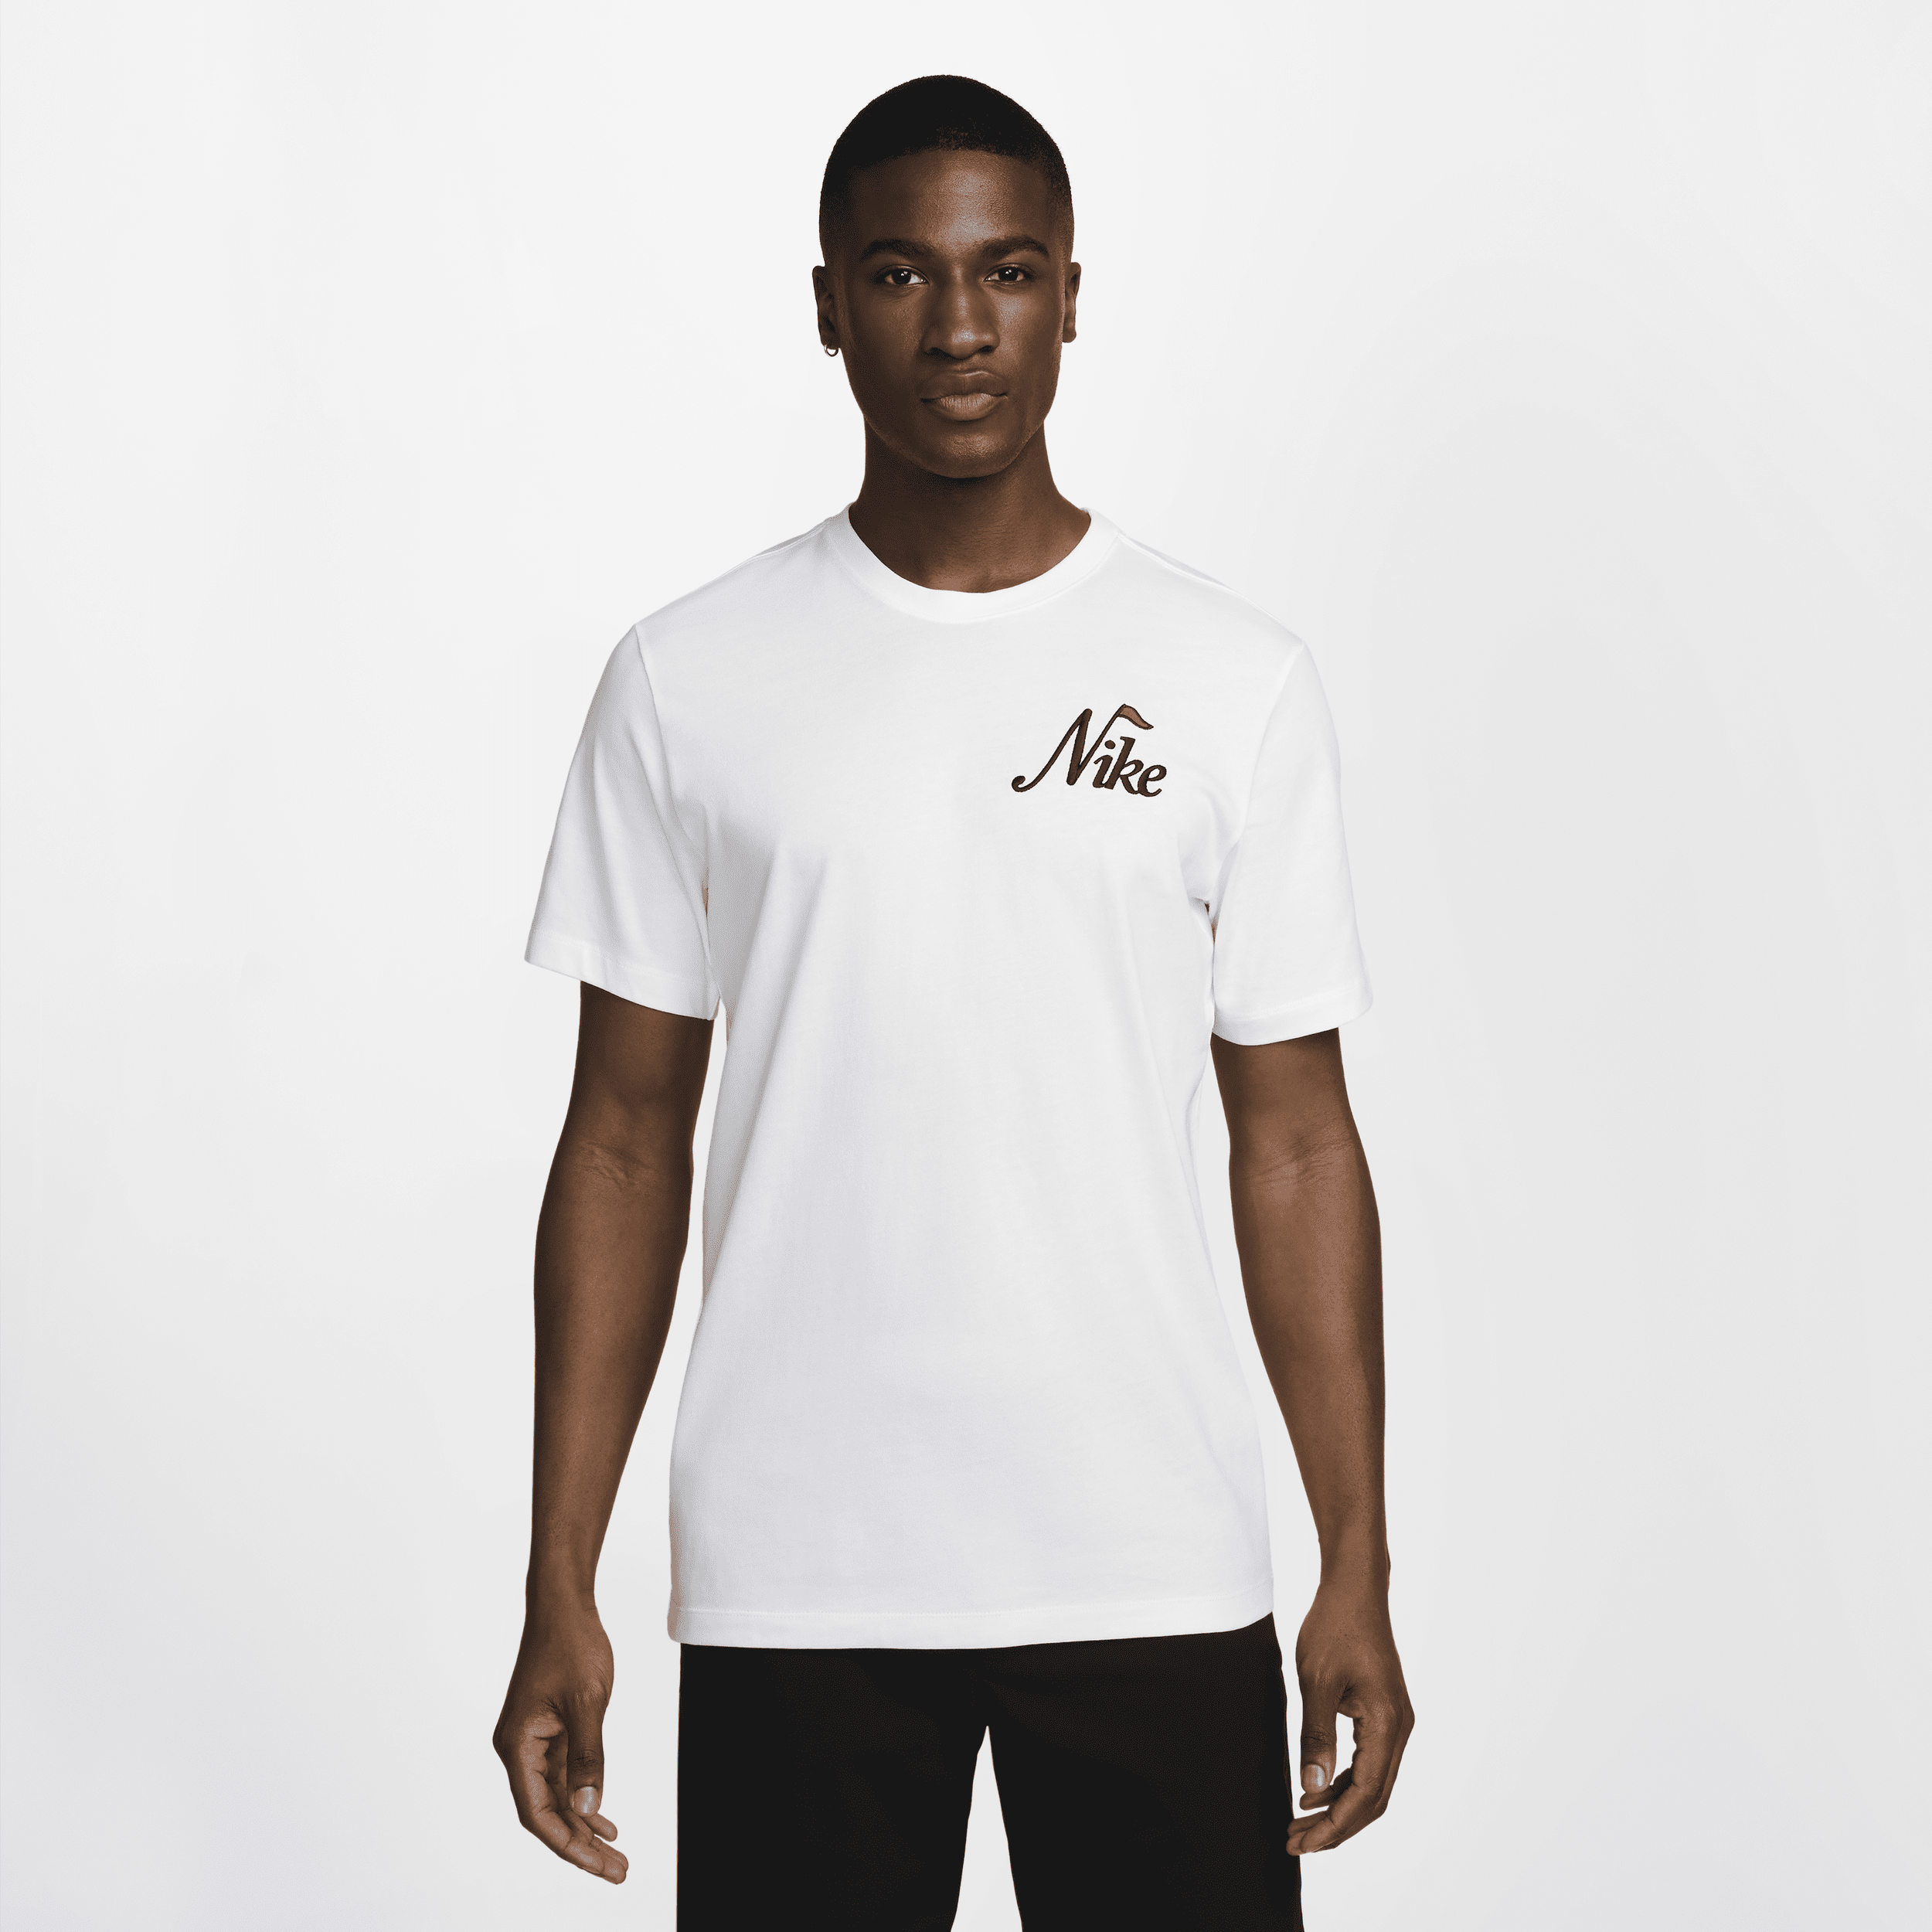 Nike Golf T-Shirt, White